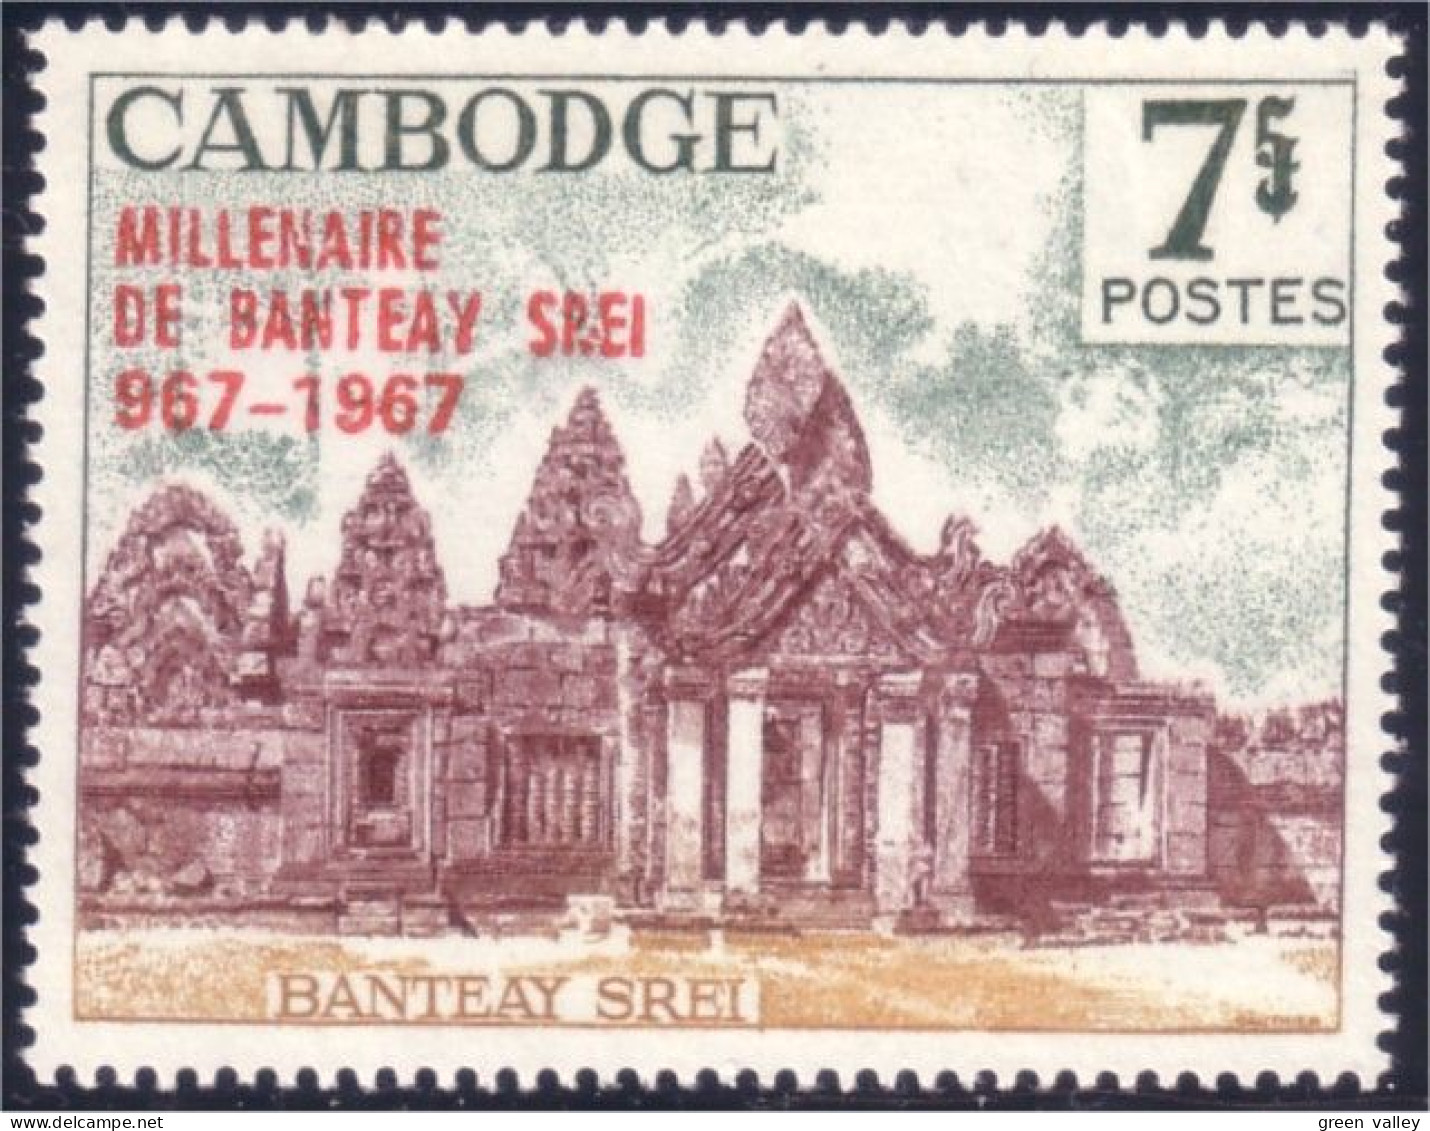 534 Cambodge Millenaire Banteay Srei MH * Neuf (KAM-222) - Cambodia